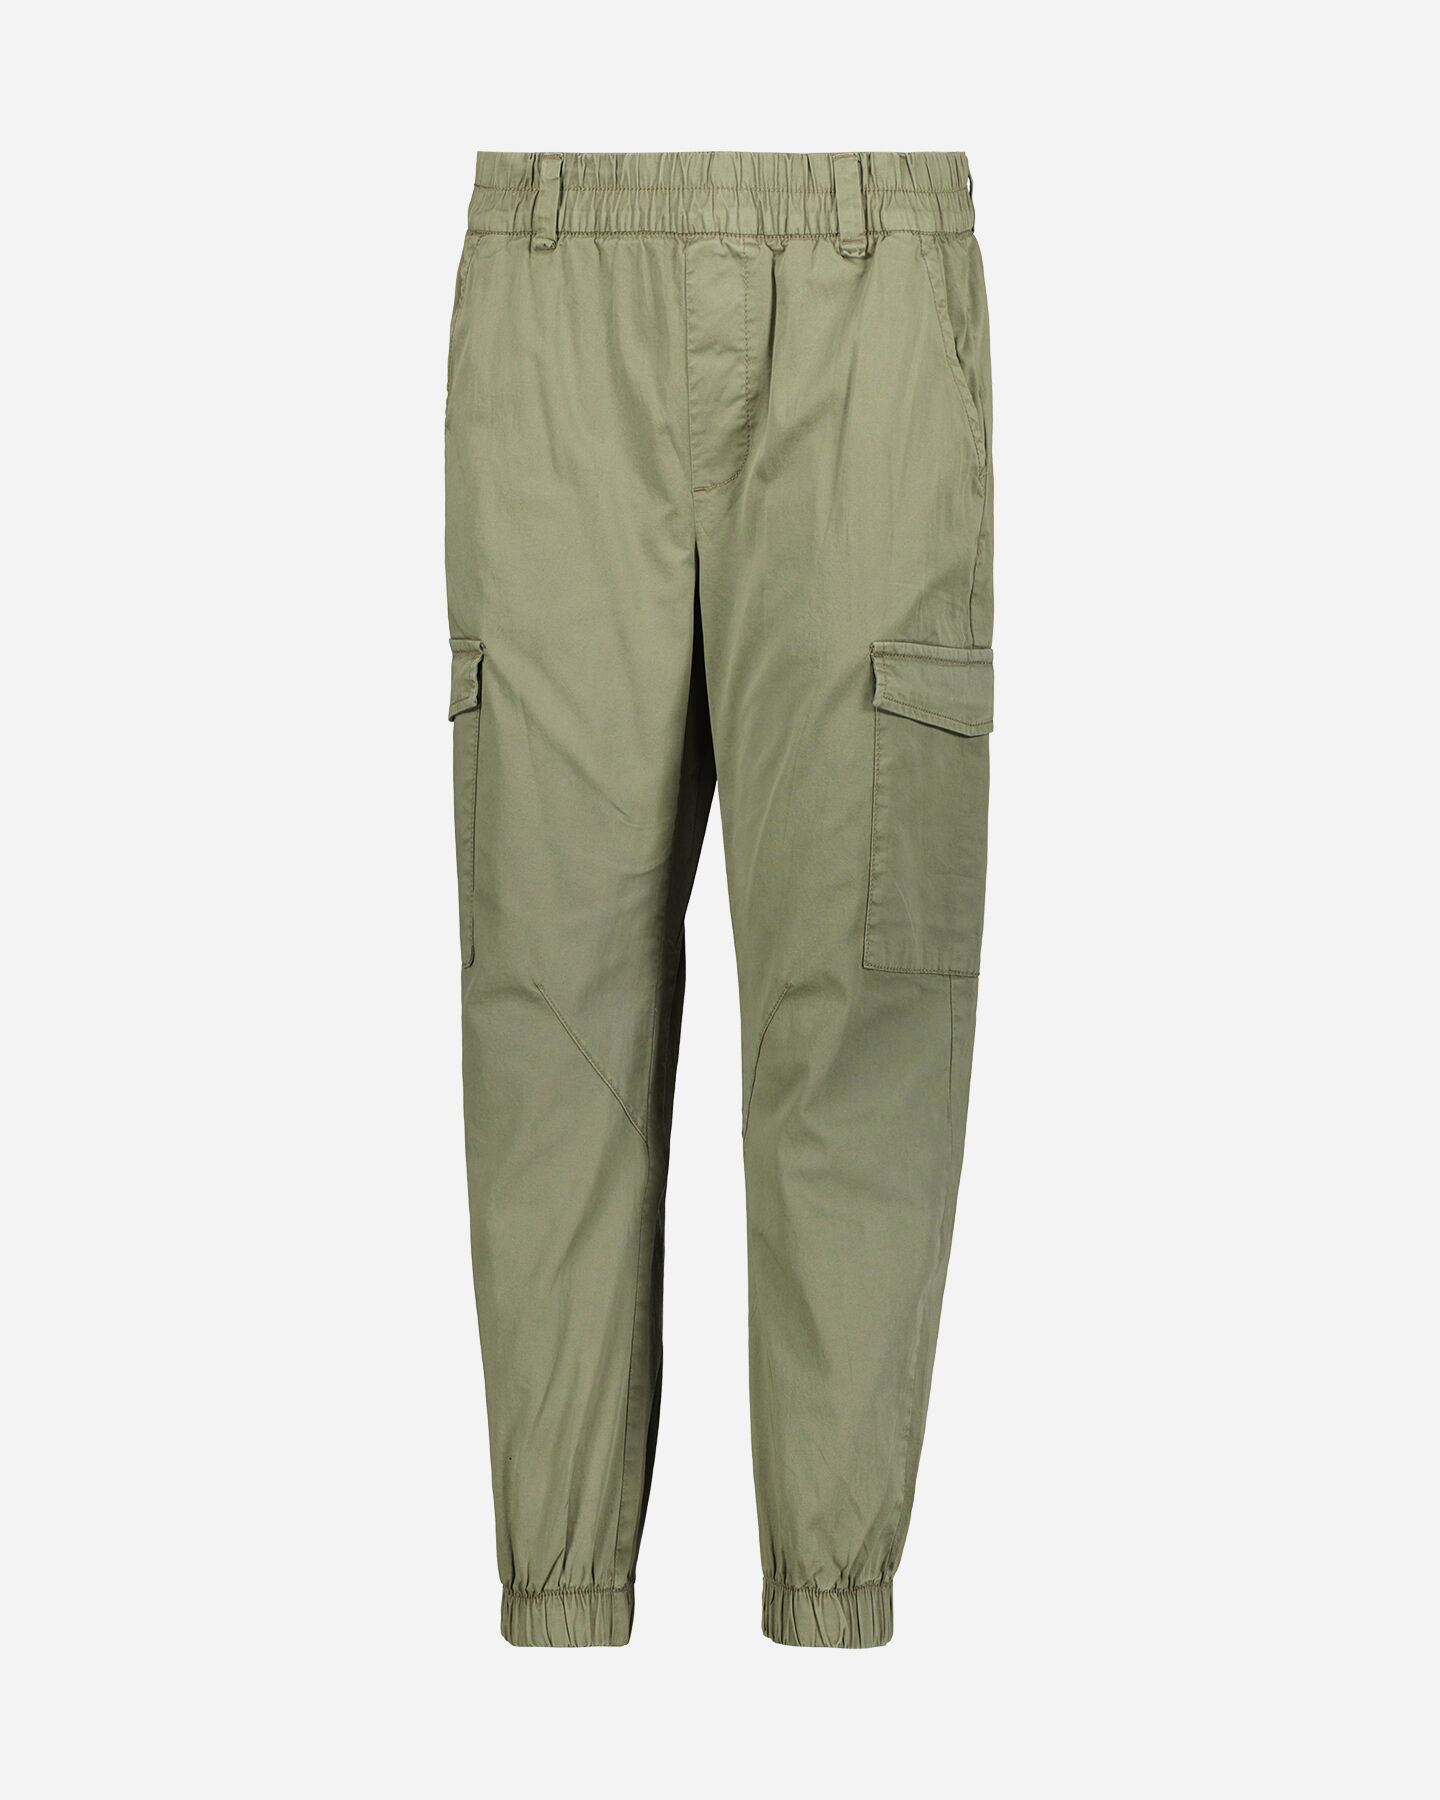  Pantalone MISTRAL POKETS STRETCH W S4100541|838|S scatto 0